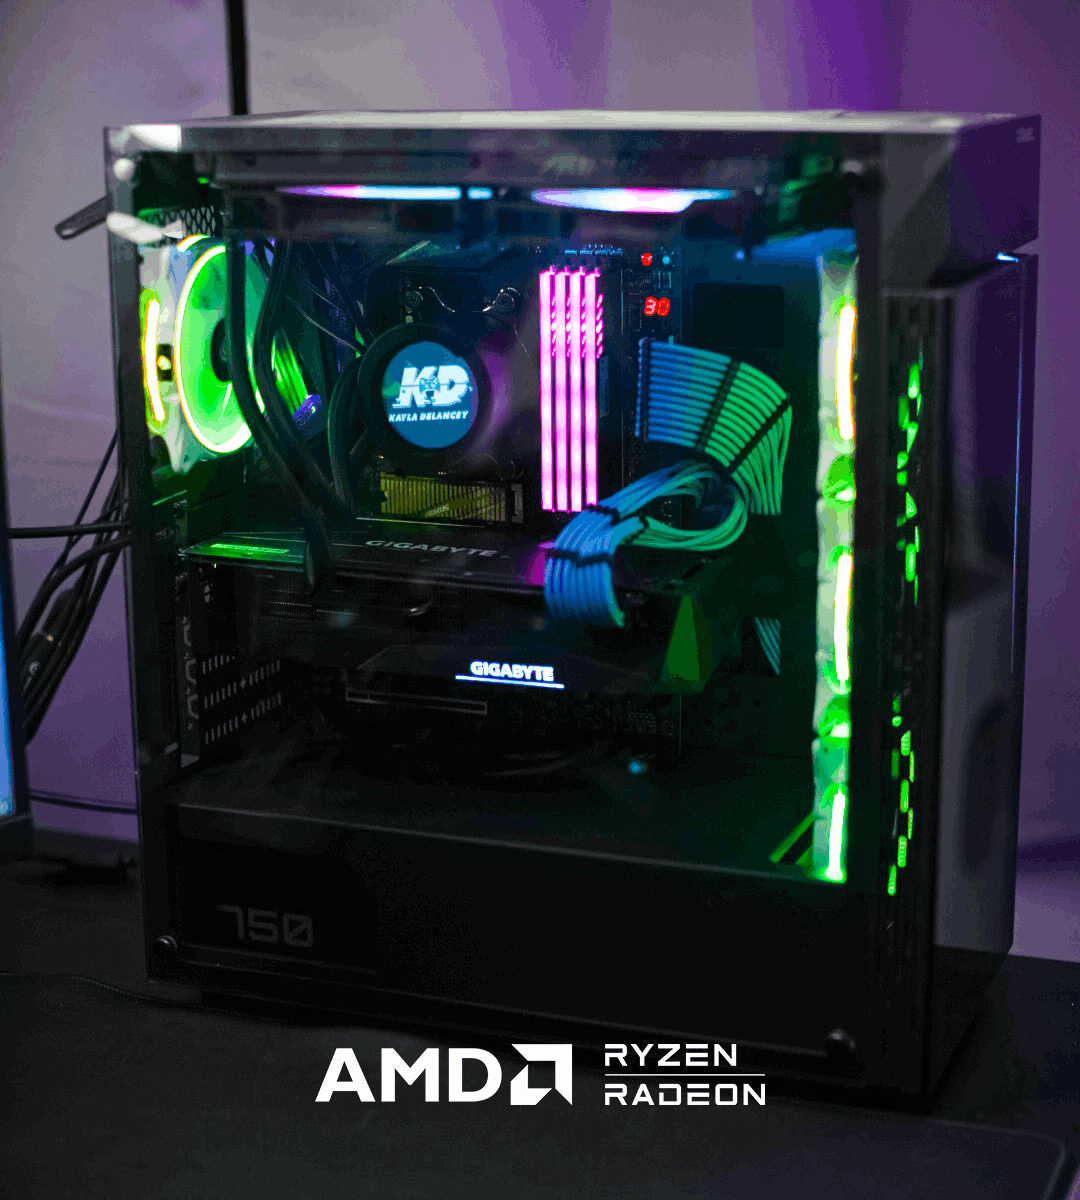 THE AORUS X AMD PC